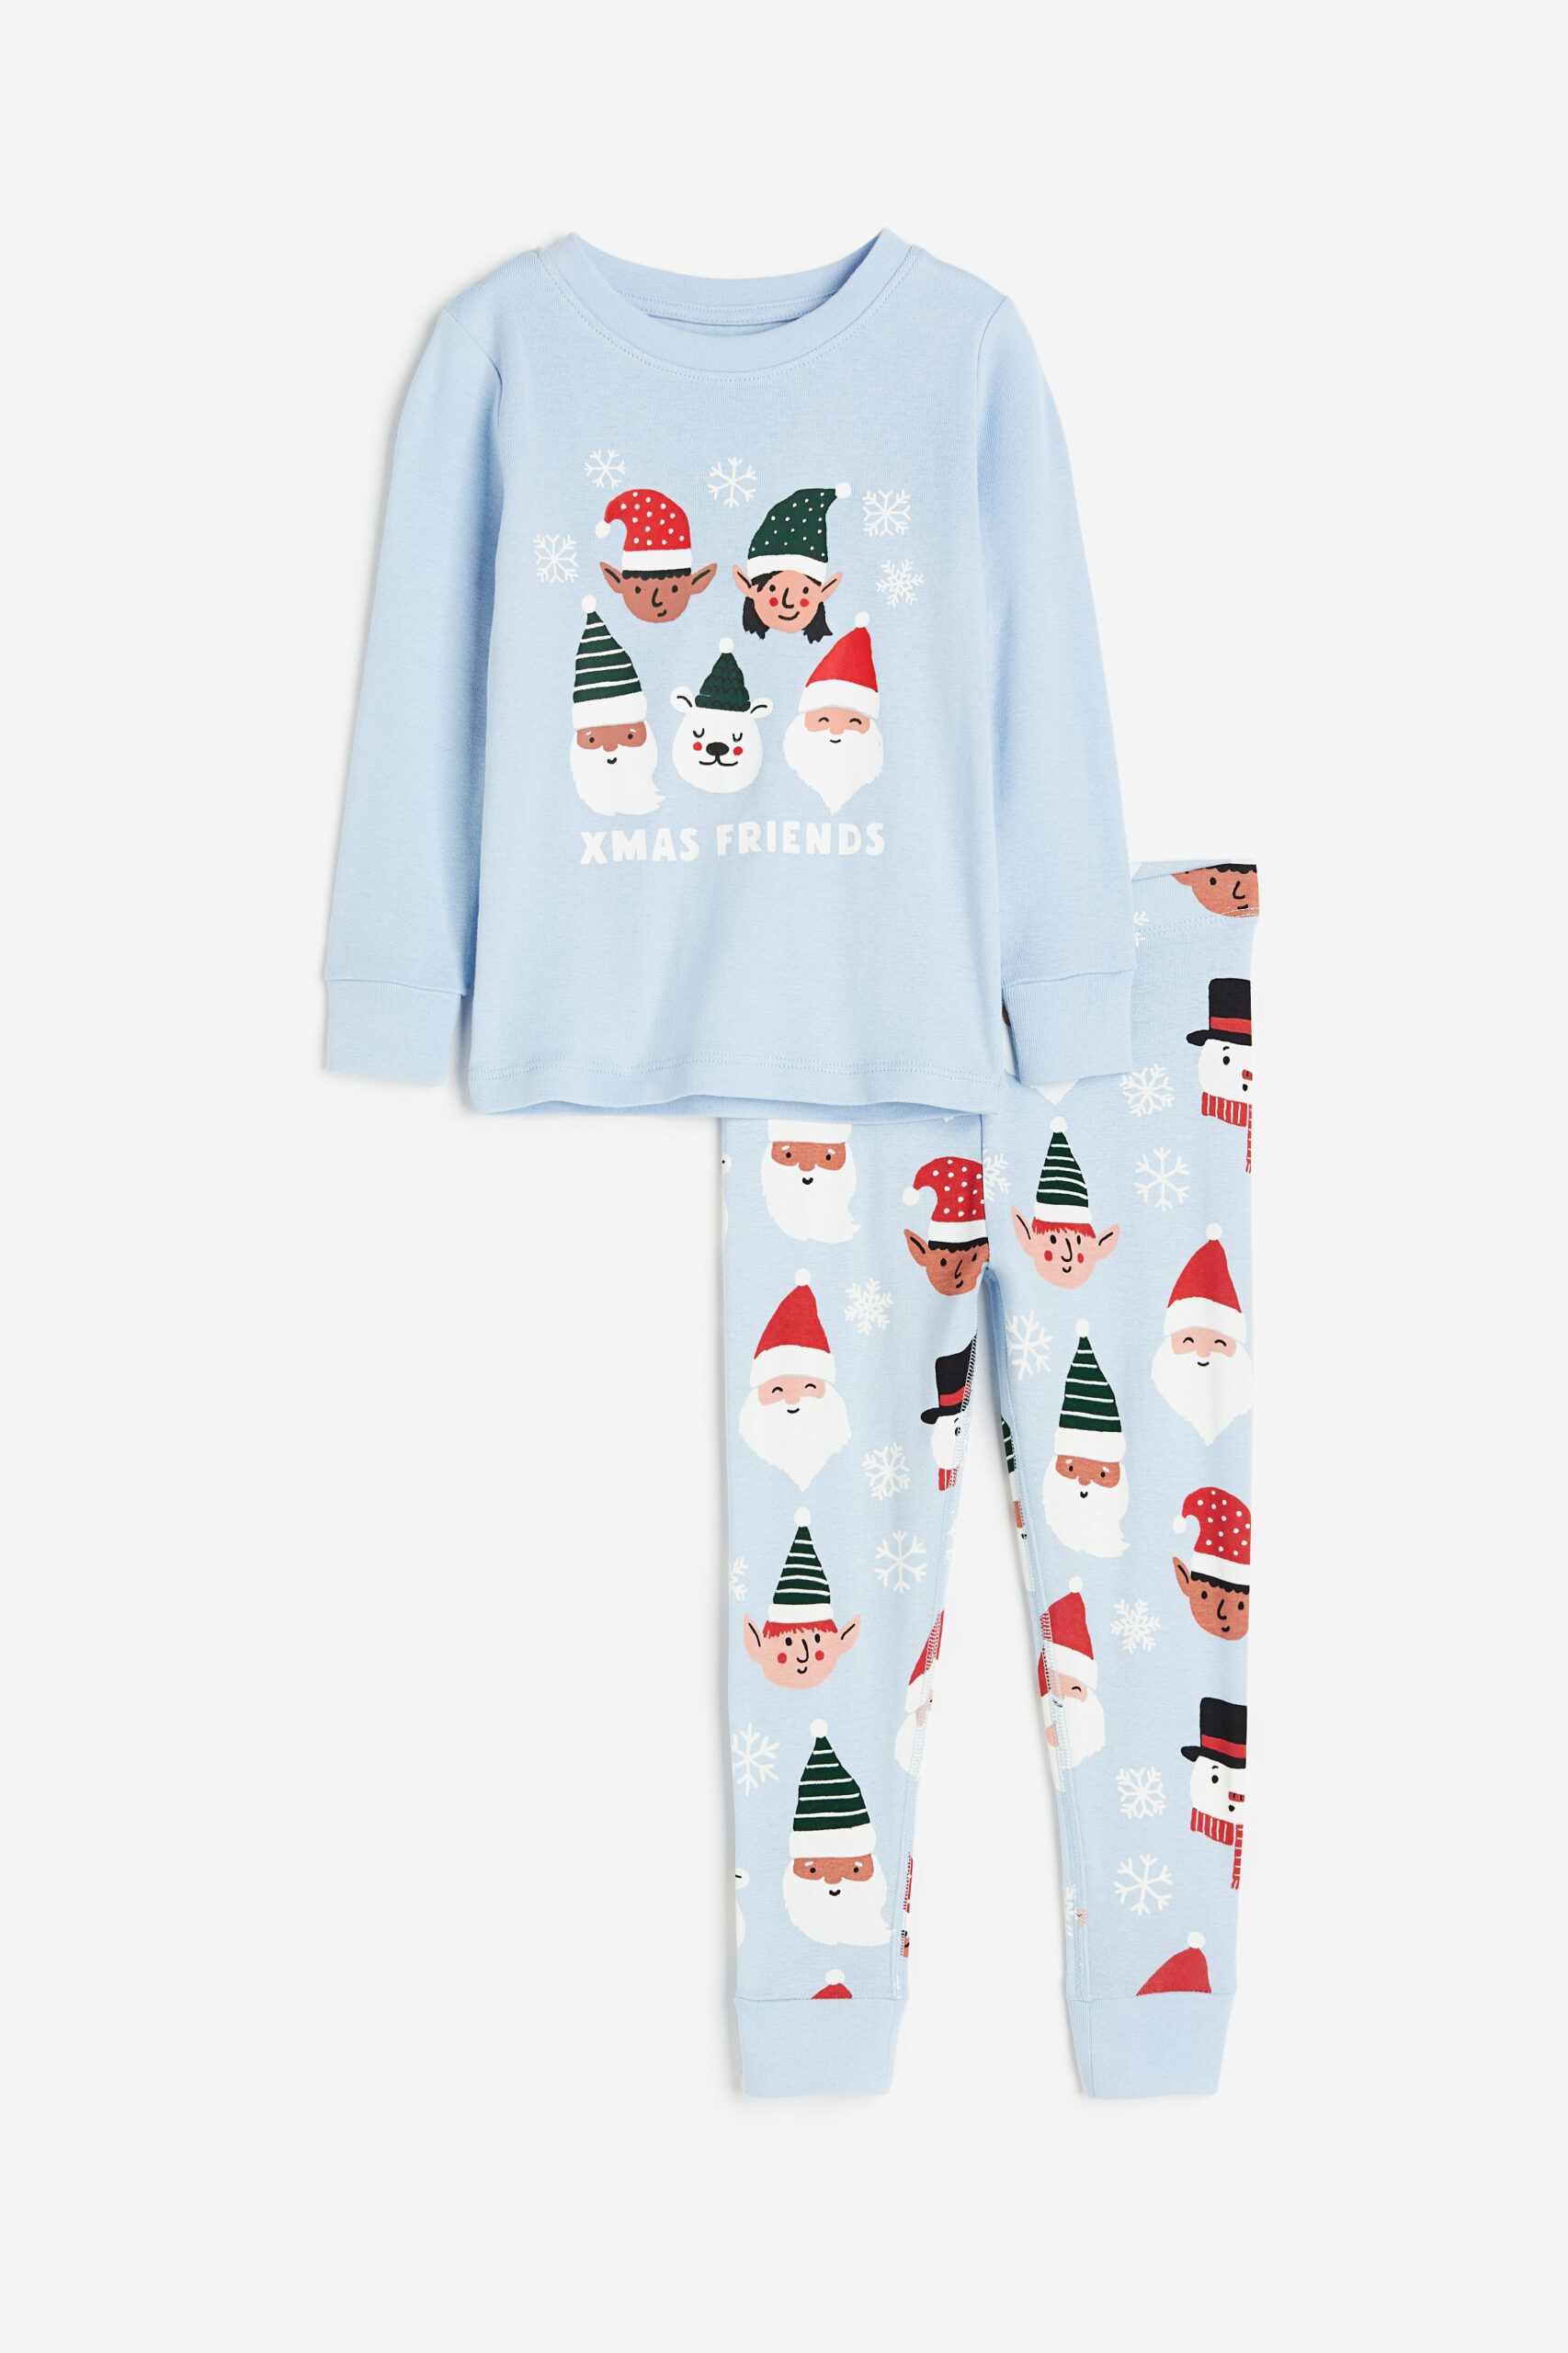 girls pajama set with "xmas friends" in writing with cartoon elves, snowmen, santa and bears